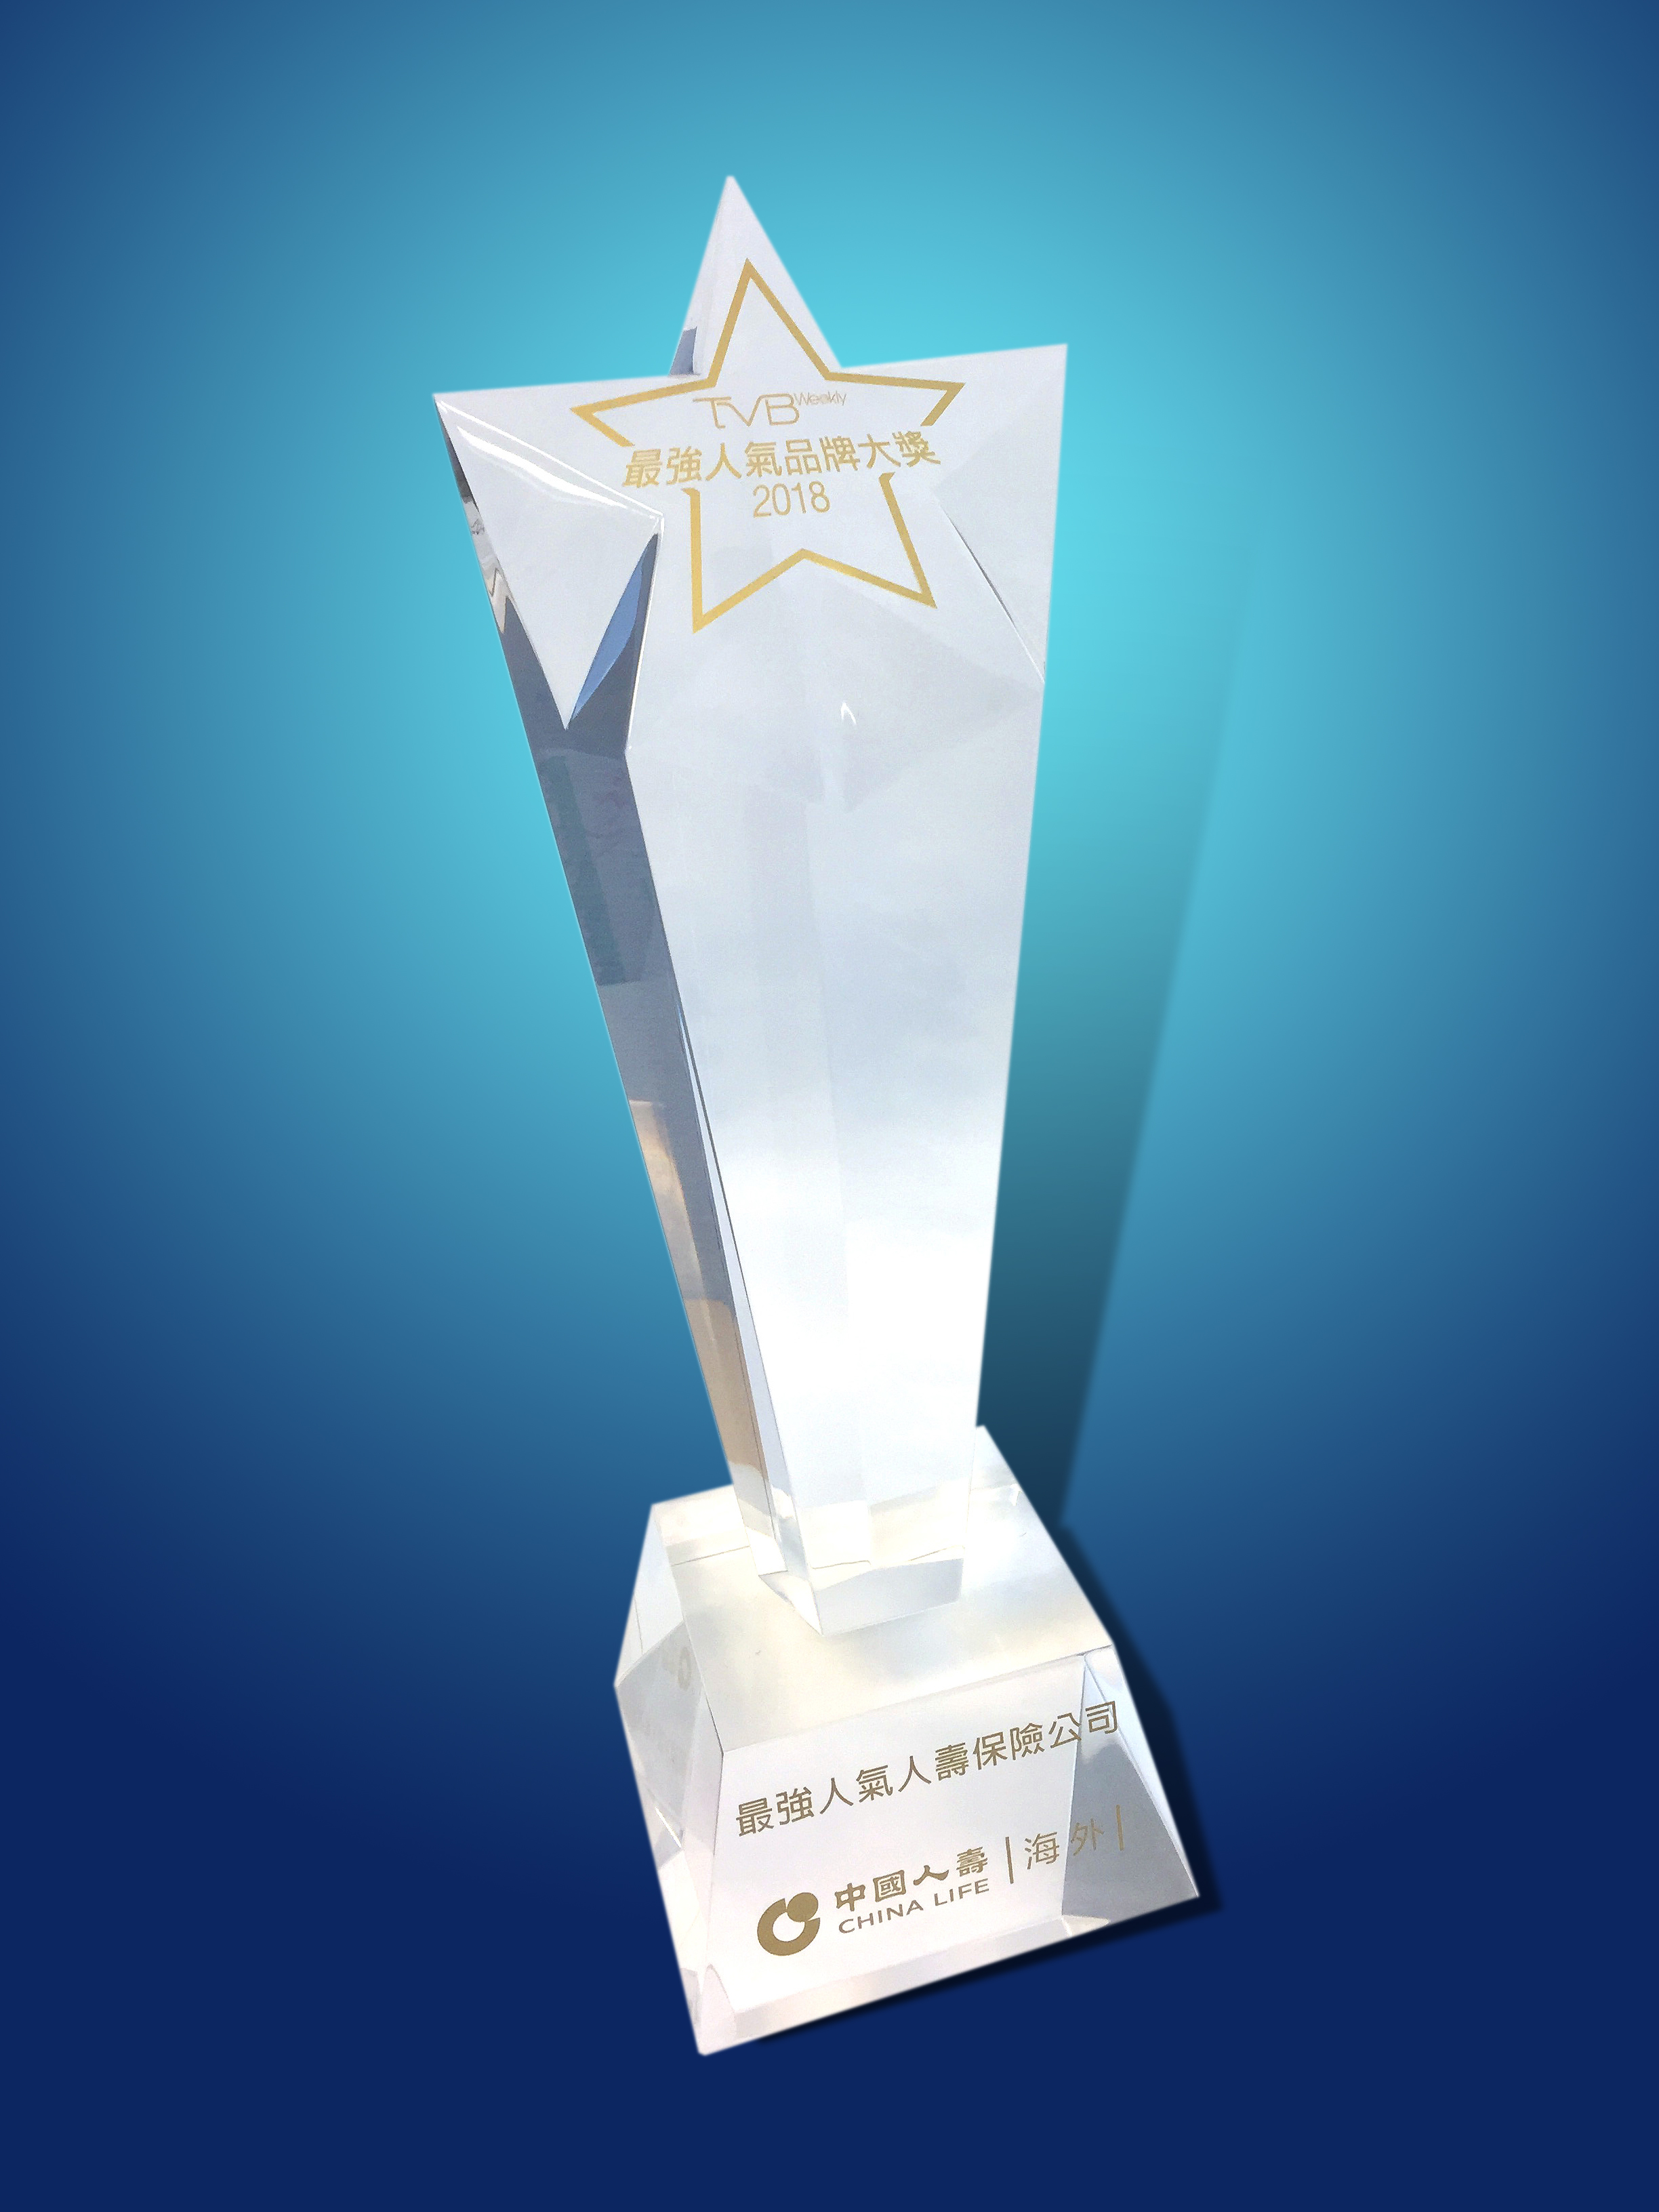 China Life (Overseas) awarded “2018 TVB Weekly Brand Award － Life Insurance Company” for four years in a row